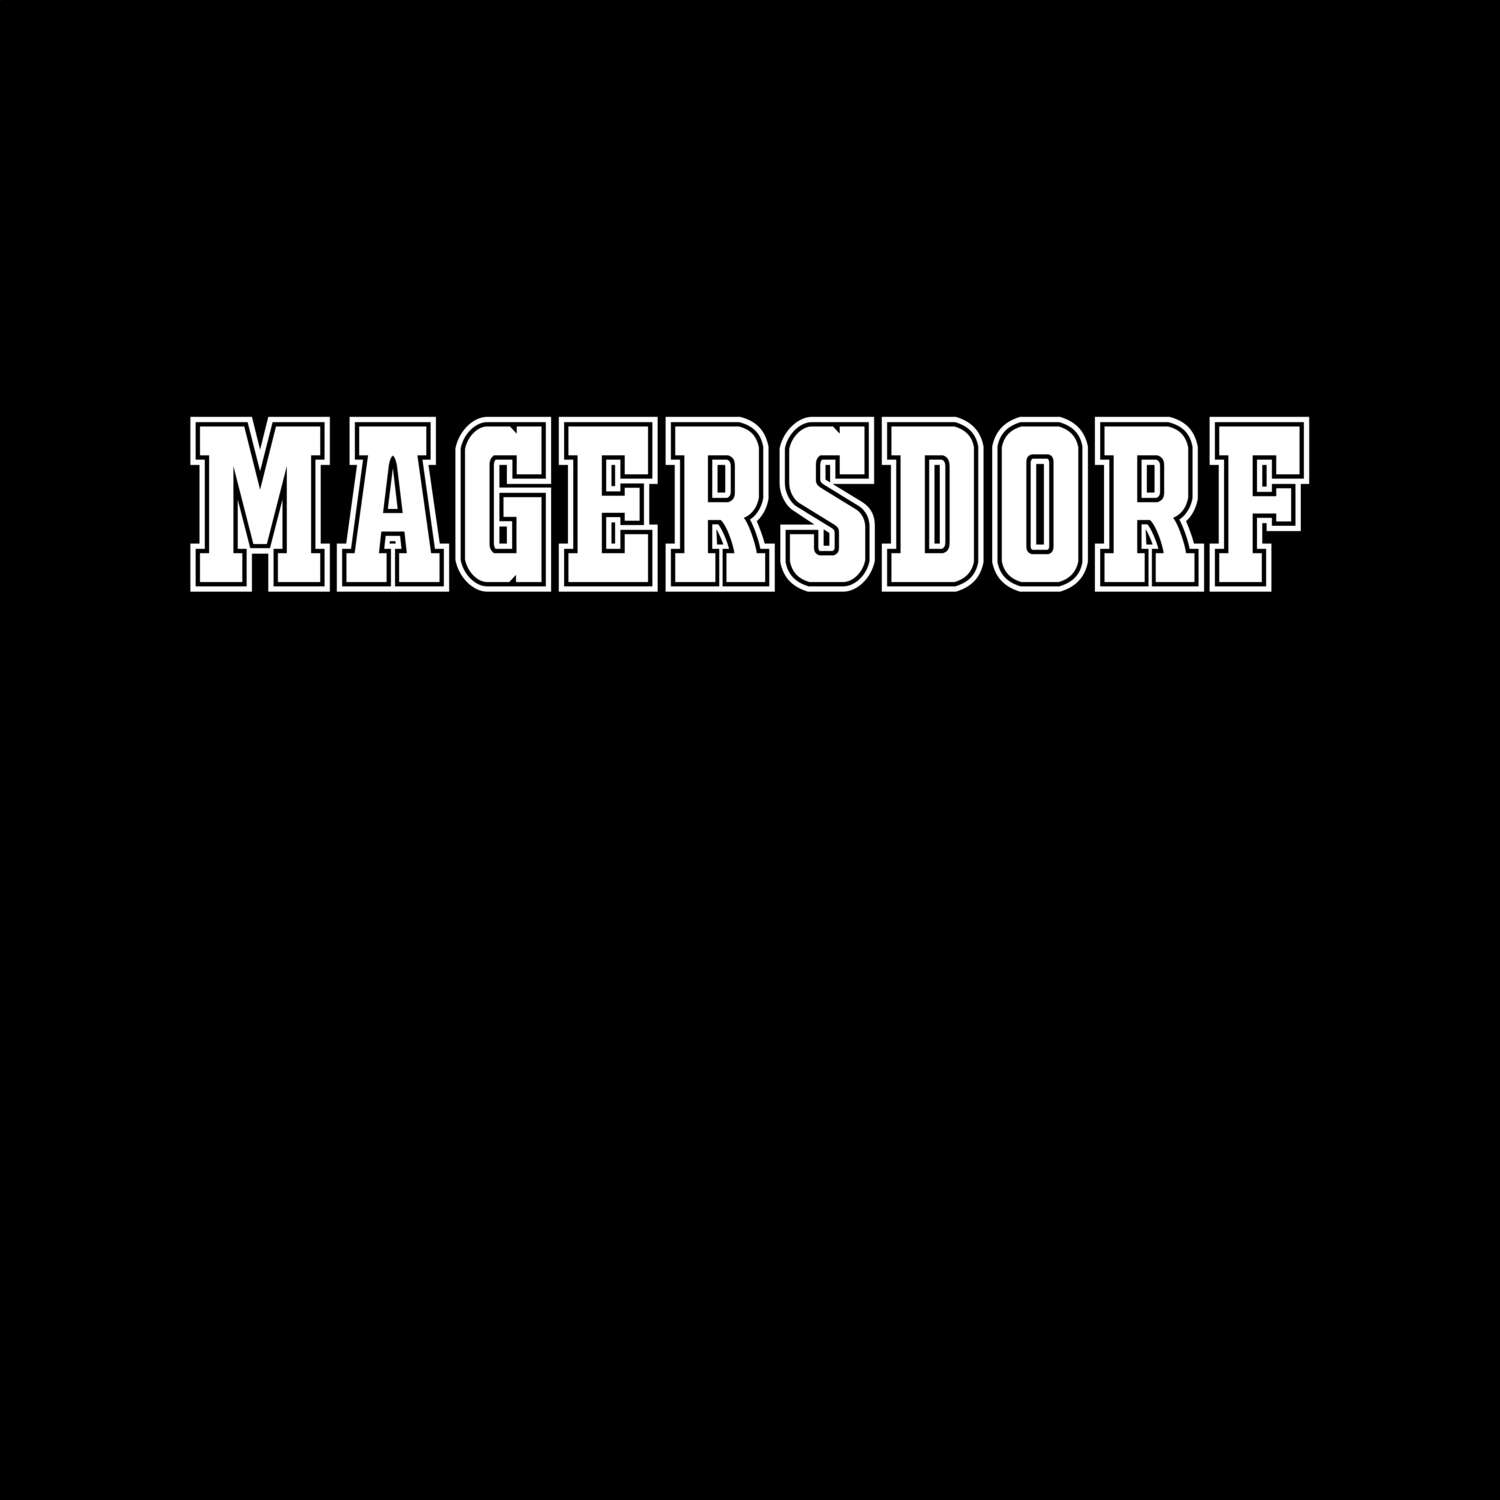 Magersdorf T-Shirt »Classic«